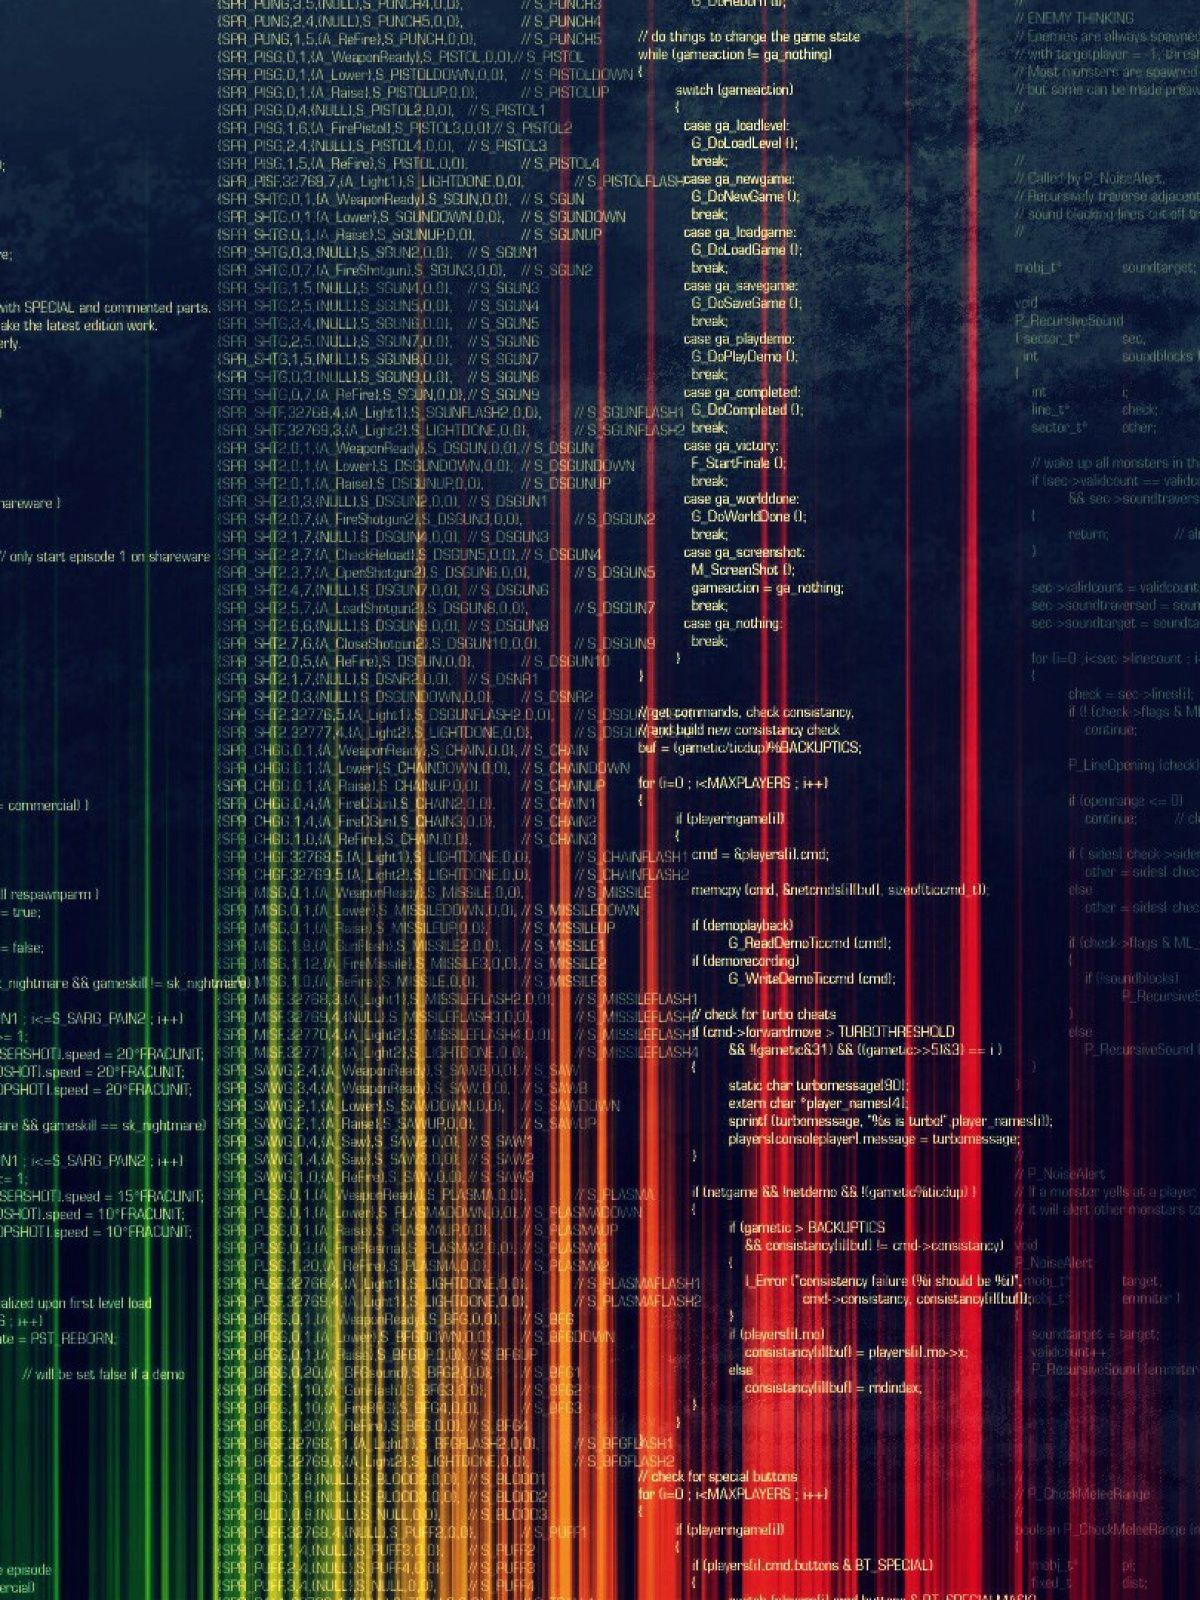 Programming phone wallpaper» HD Wallpapers